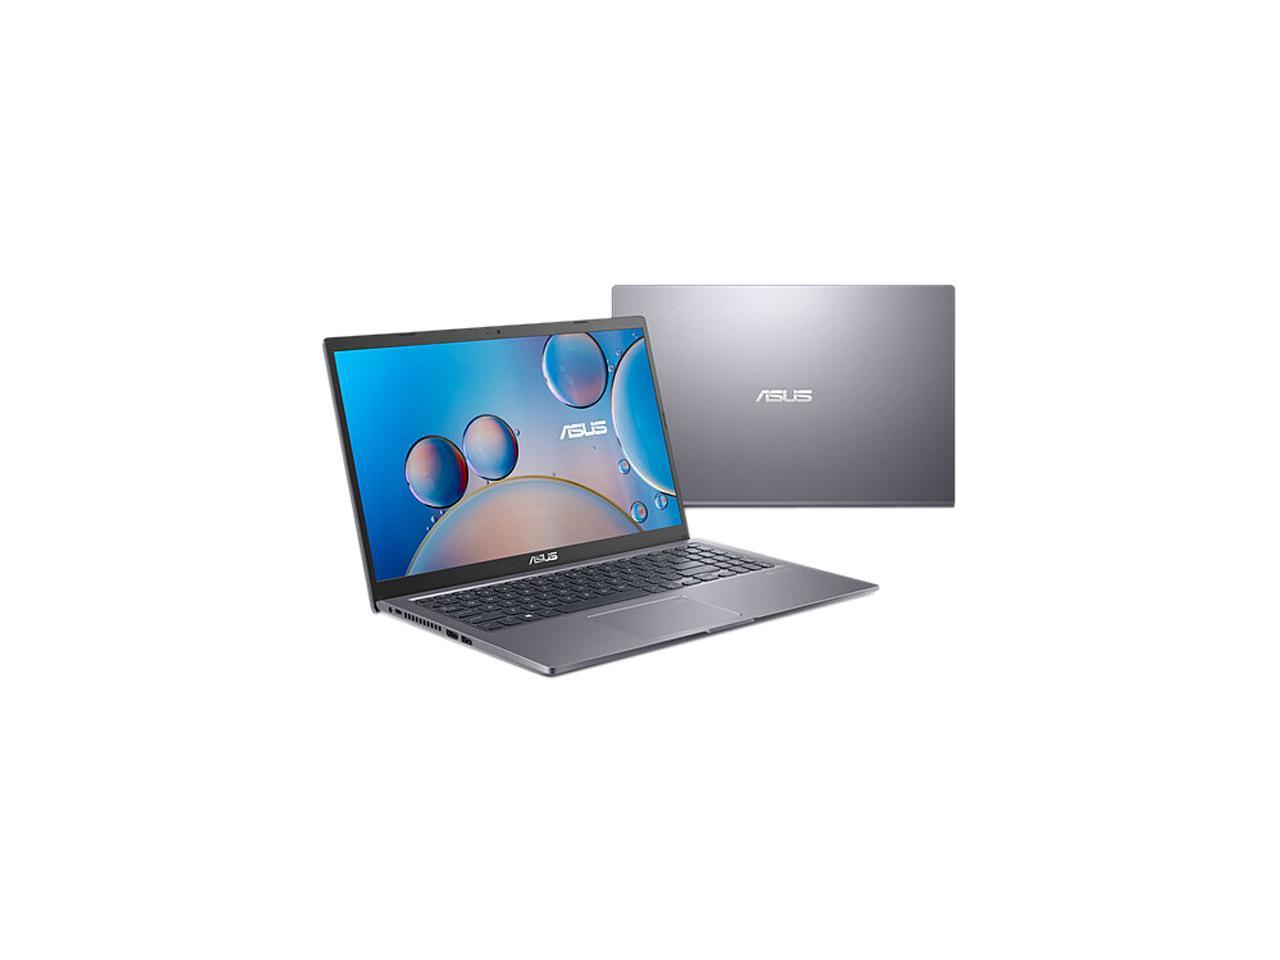 ASUS VivoBook 15 F515 (F515EA-DH75) 15.6″ Thin and Light Laptop, 11th Gen Core i7, 8GB RAM, 512GB SSD